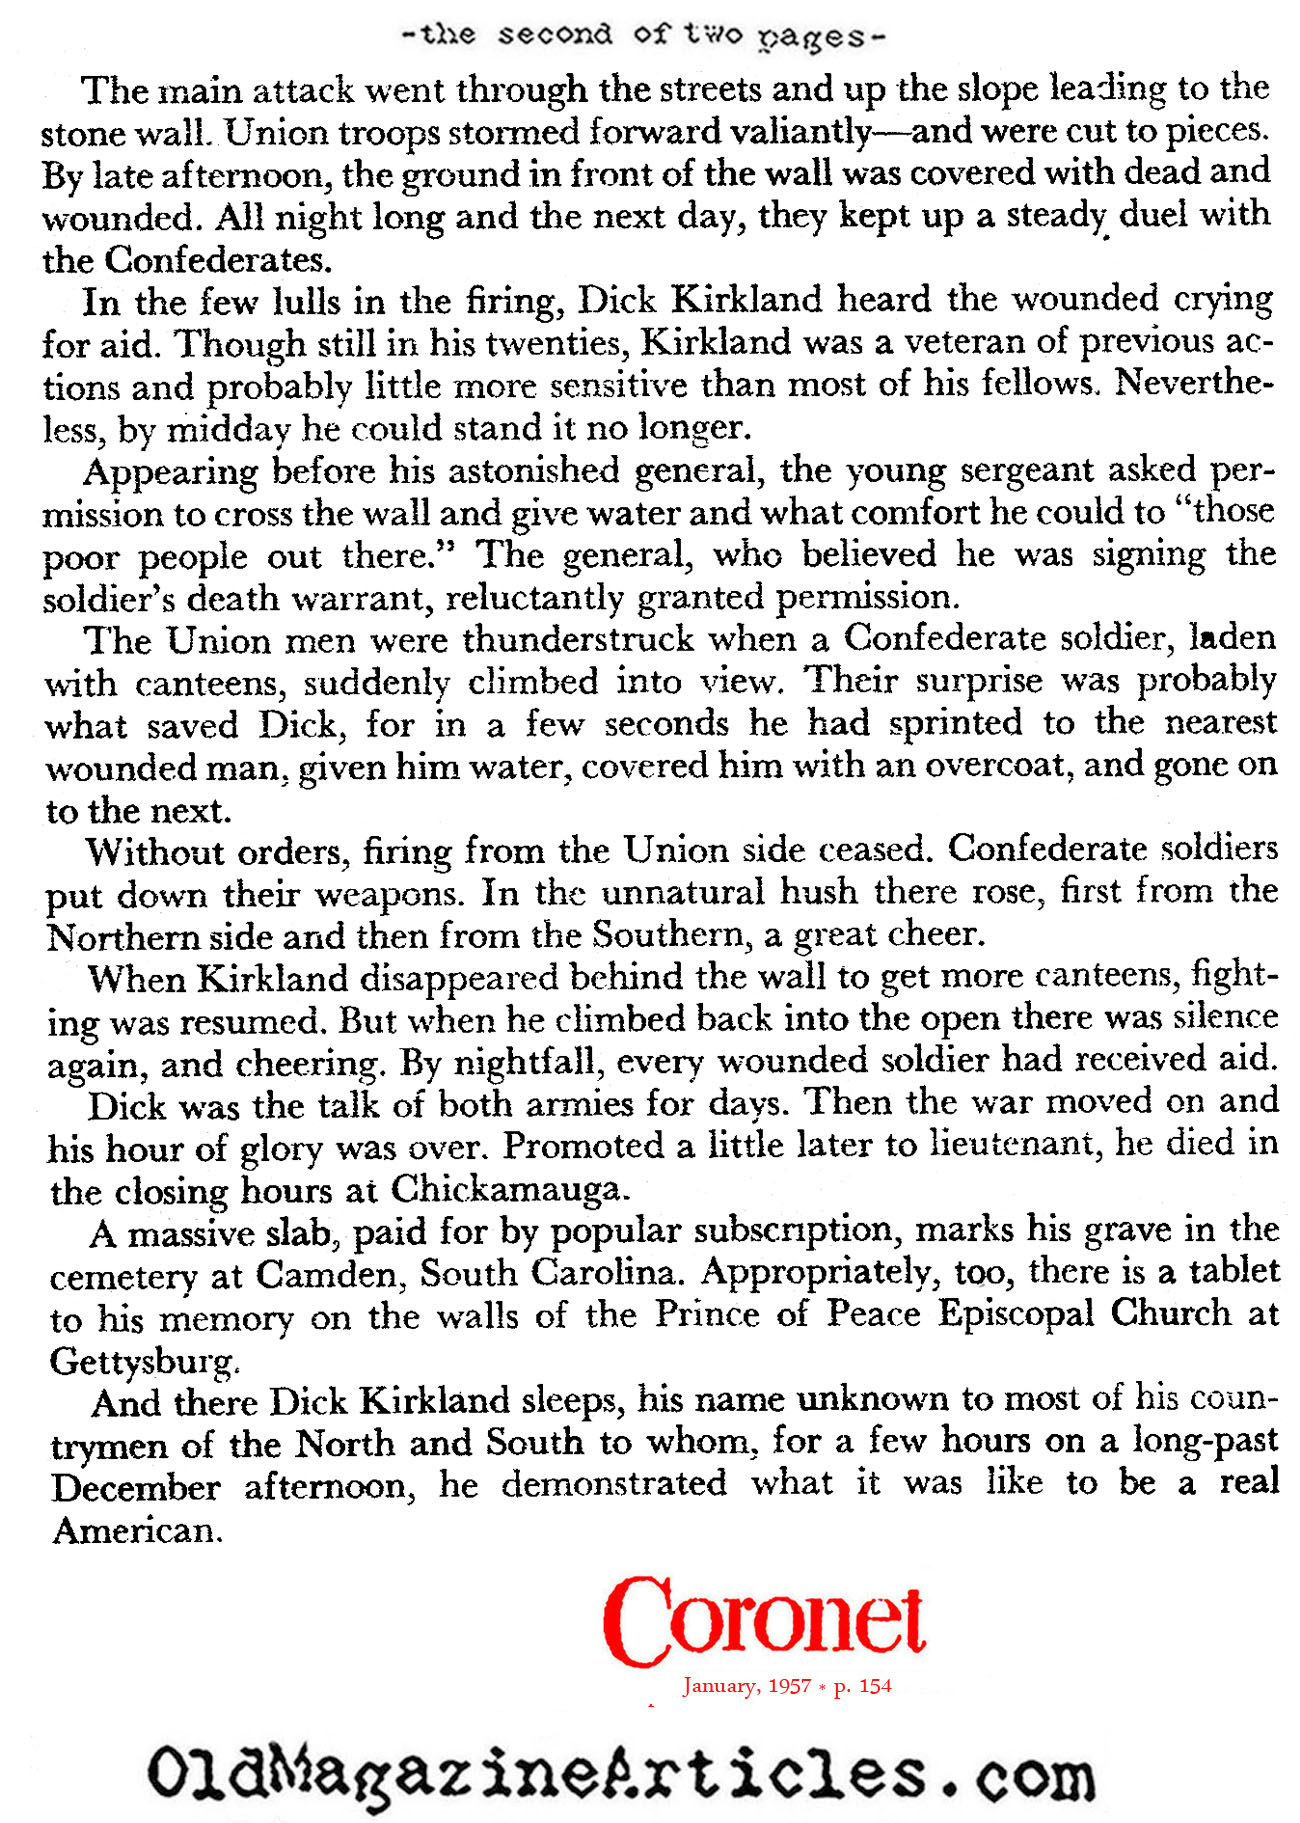 The Humanity of Dick Kirkland (Coronet Magazine, 1957)